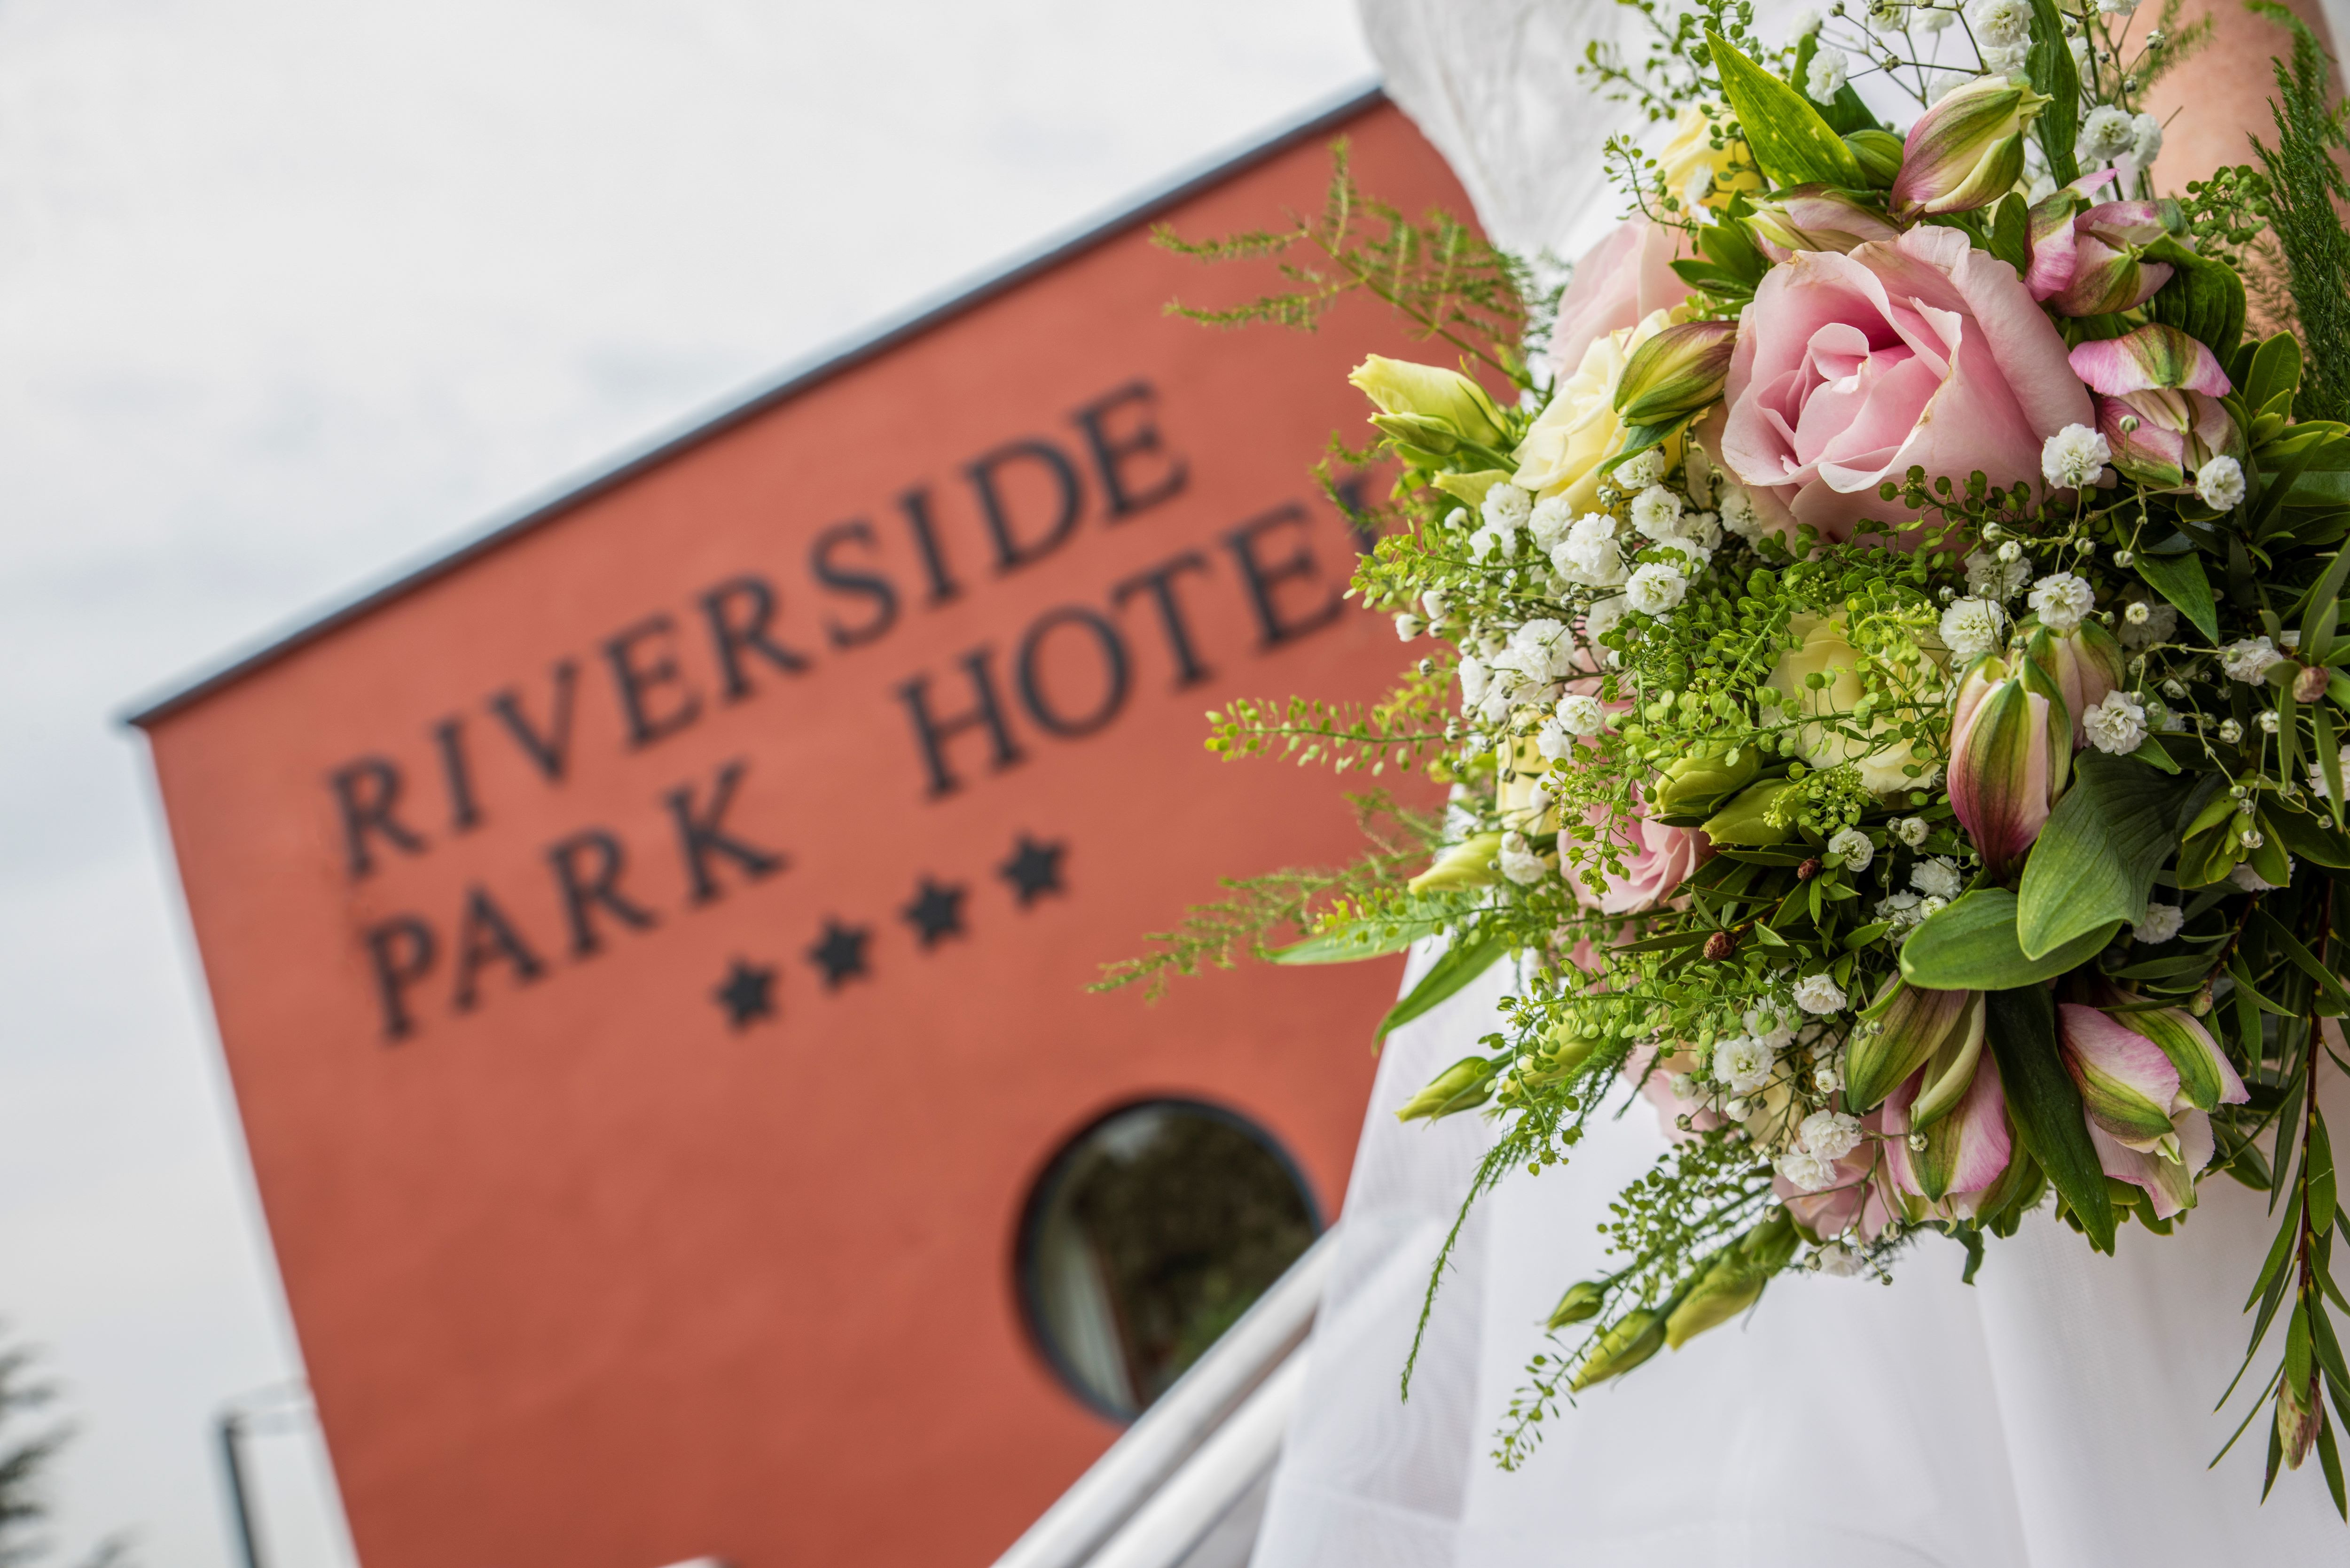 Riverside Park Hotel